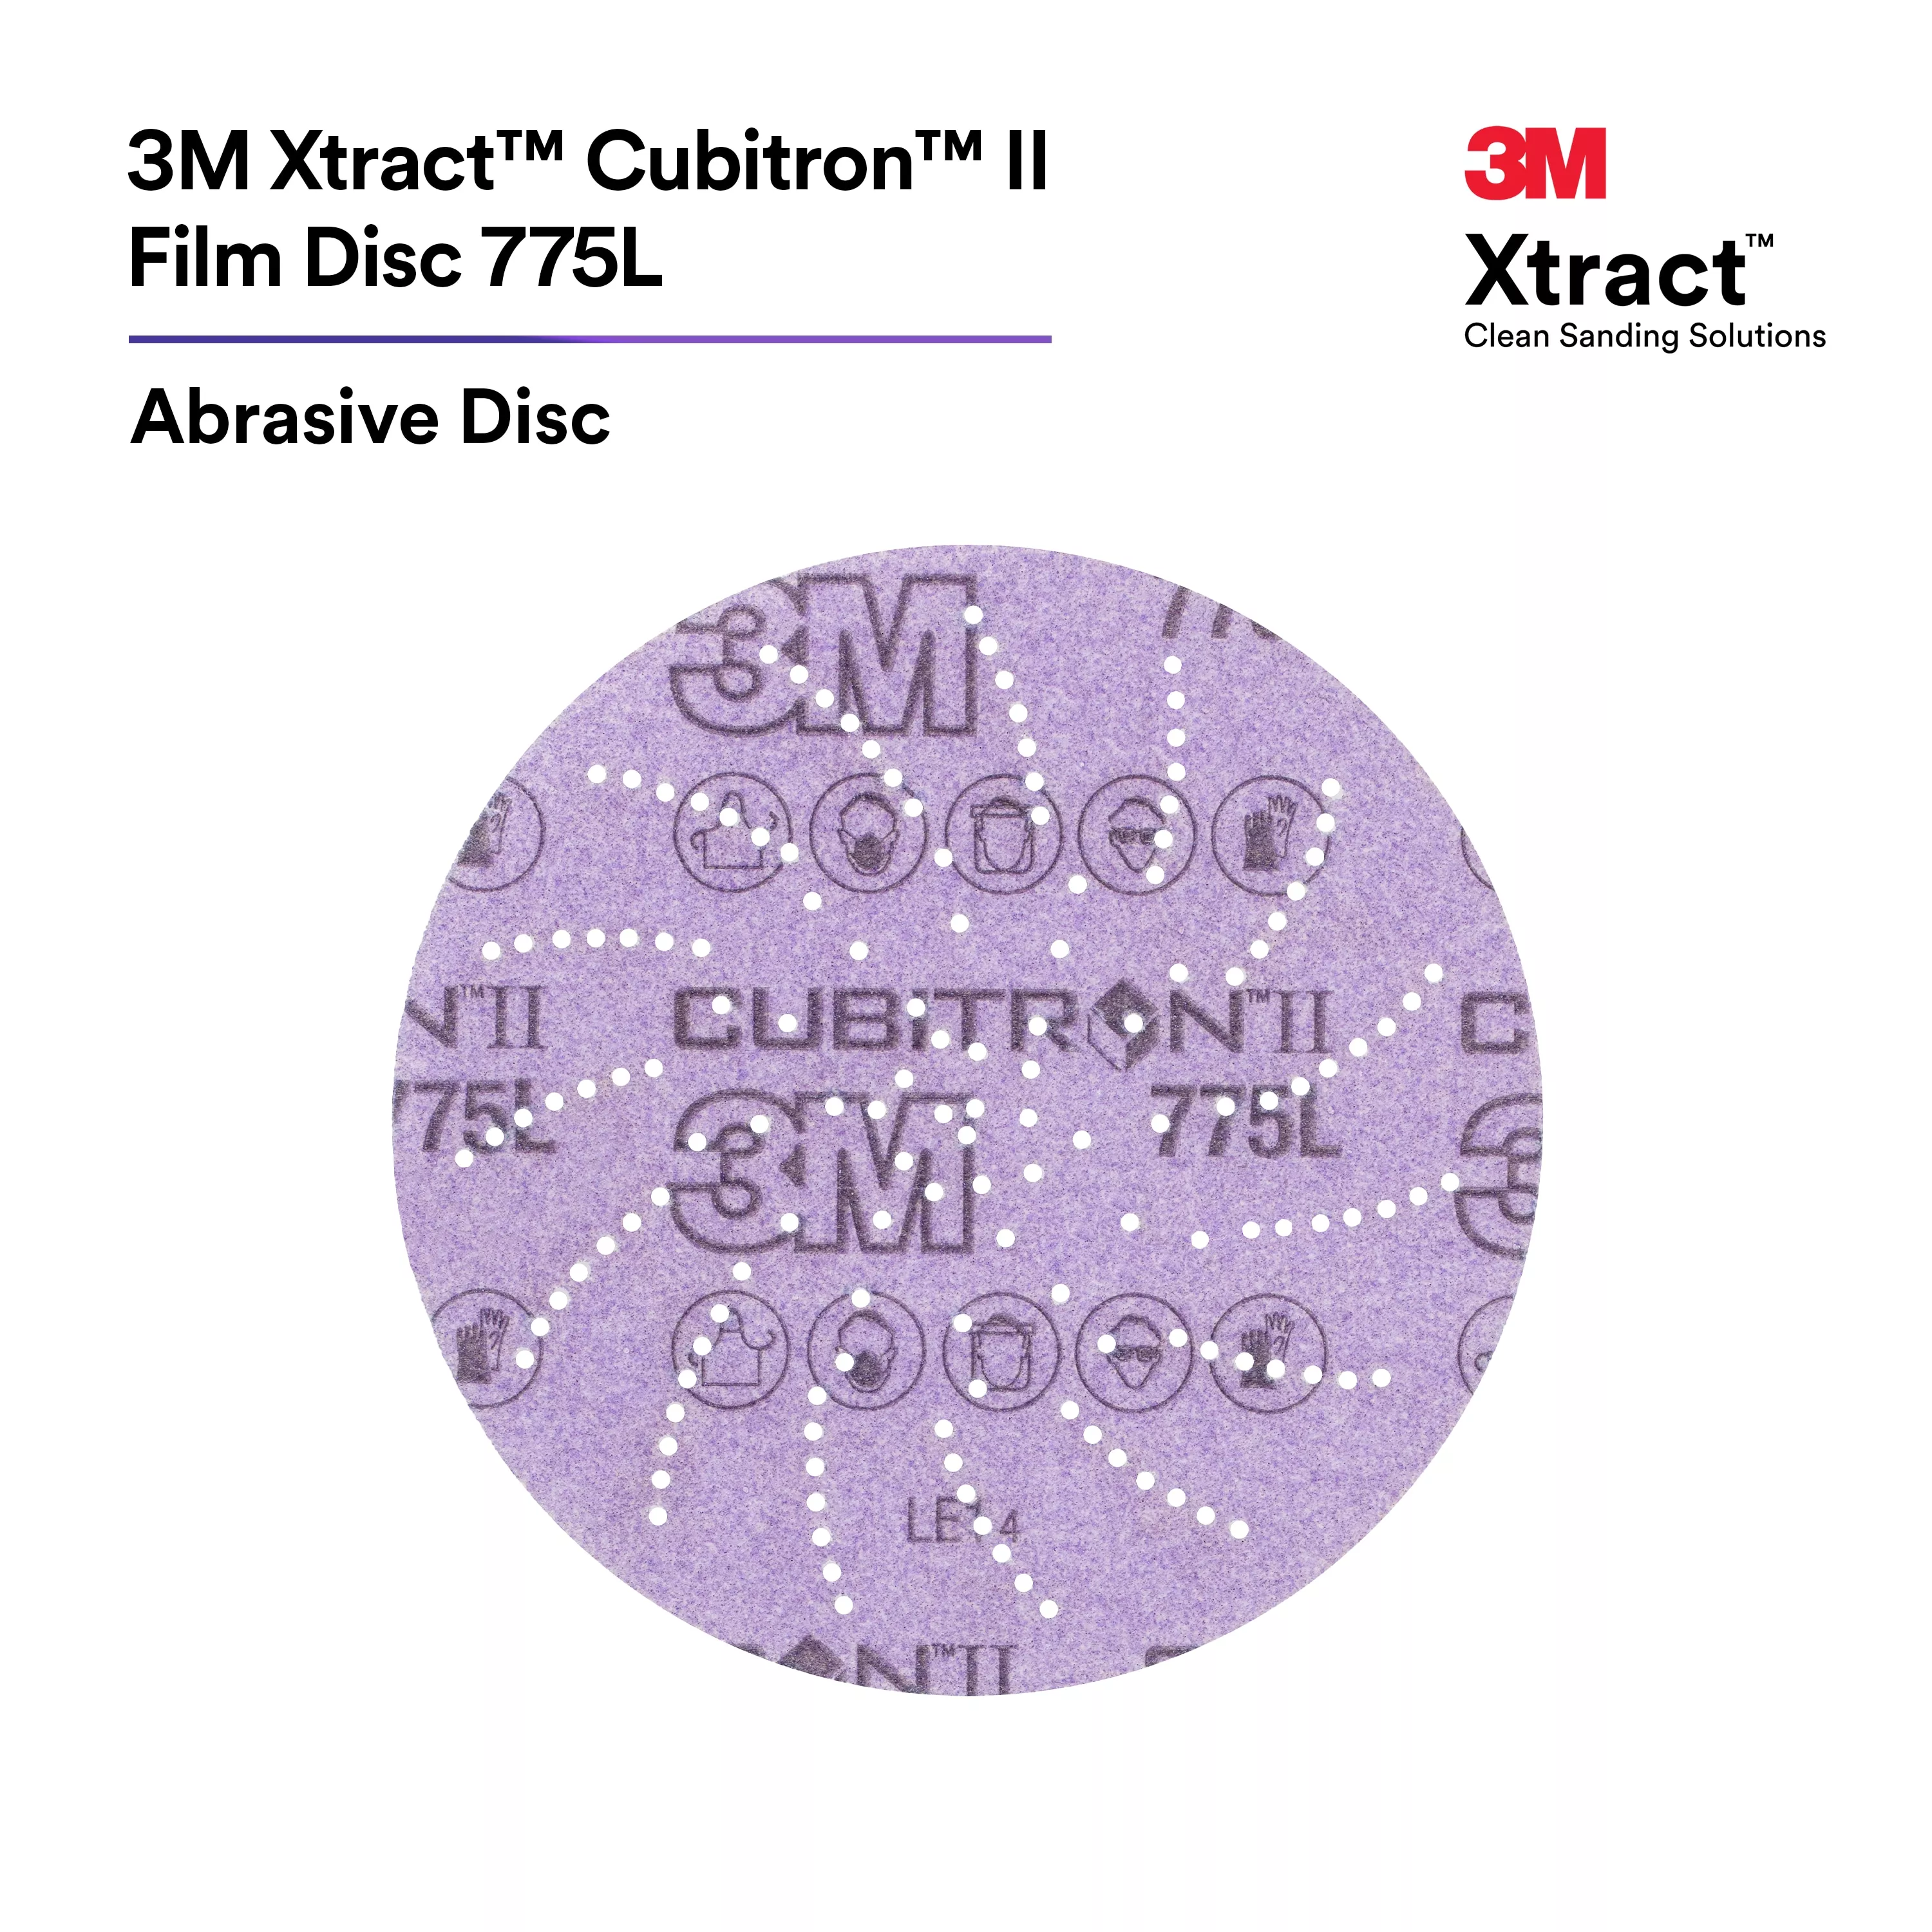 SKU 7100145460 | 3M Xtract™ Cubitron™ II Film Disc 775L